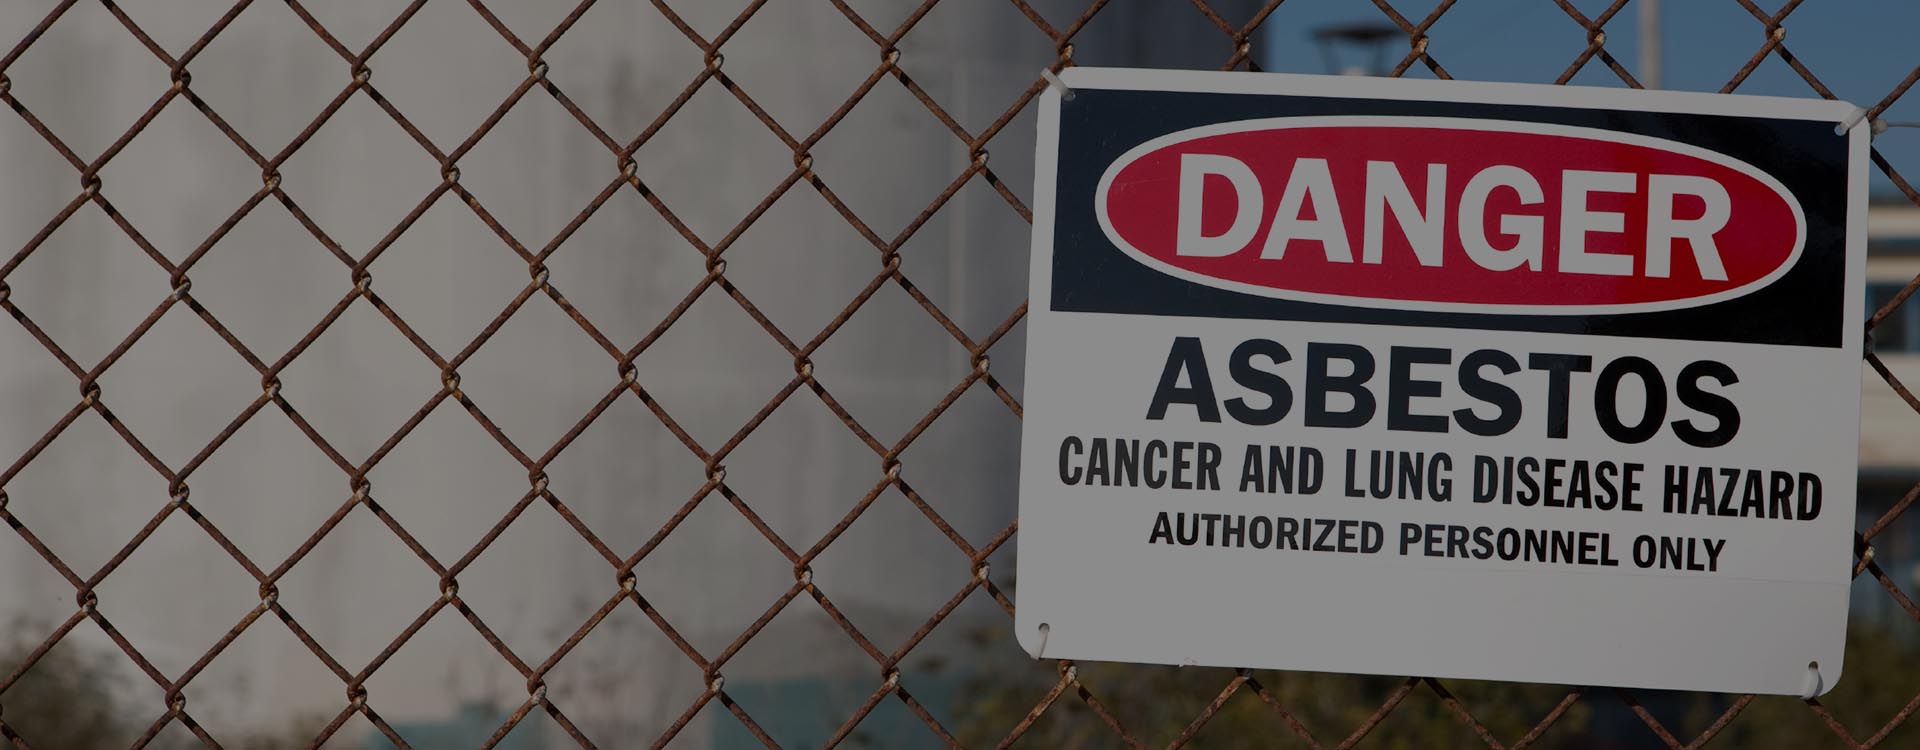 danger asbestos slide